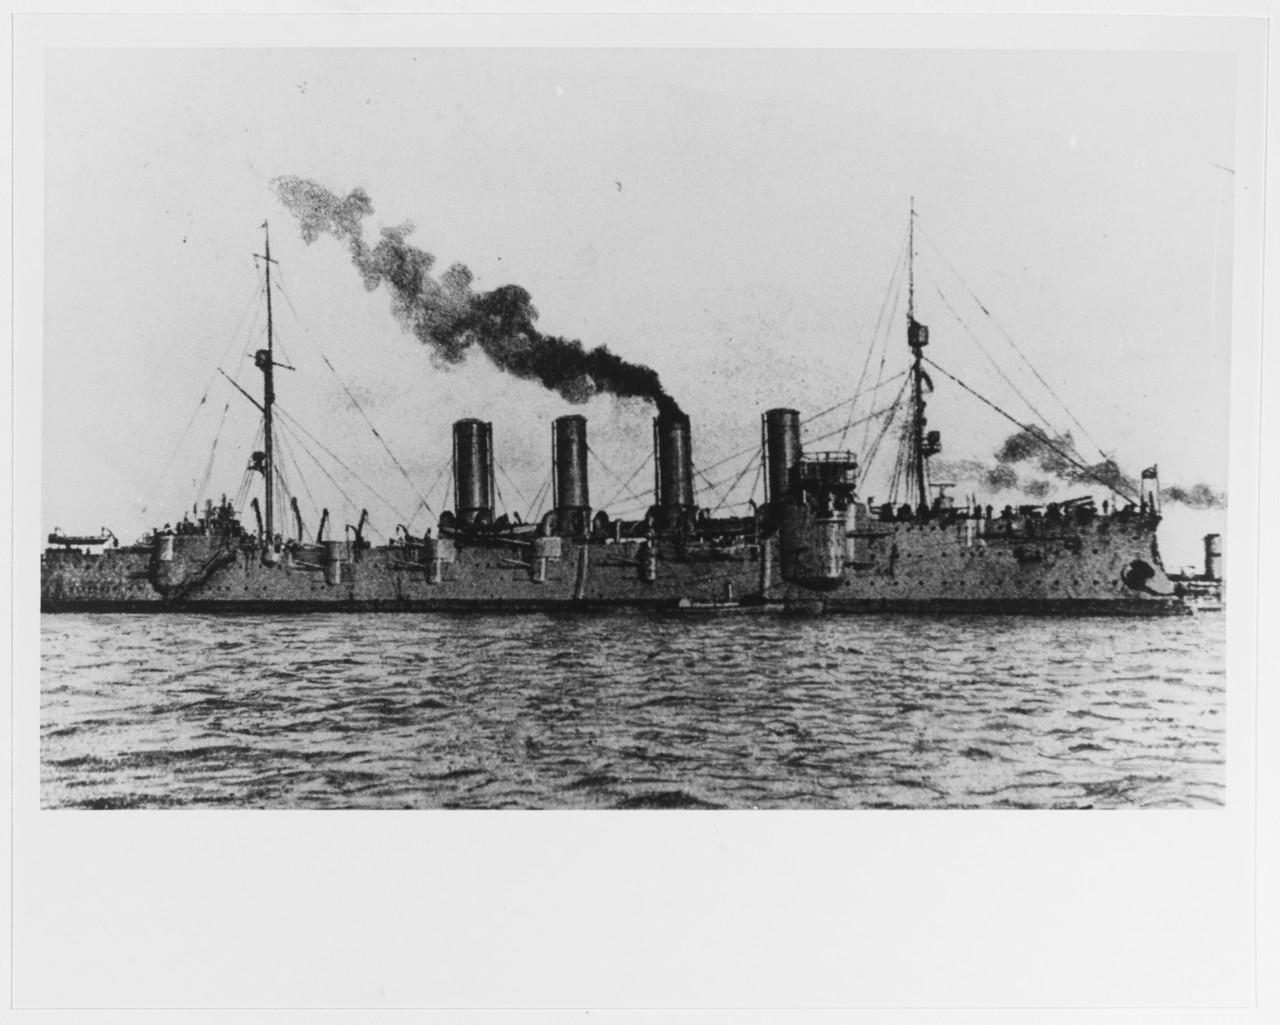 GROMOBOI (Russian armored cruiser, 1899-1922)